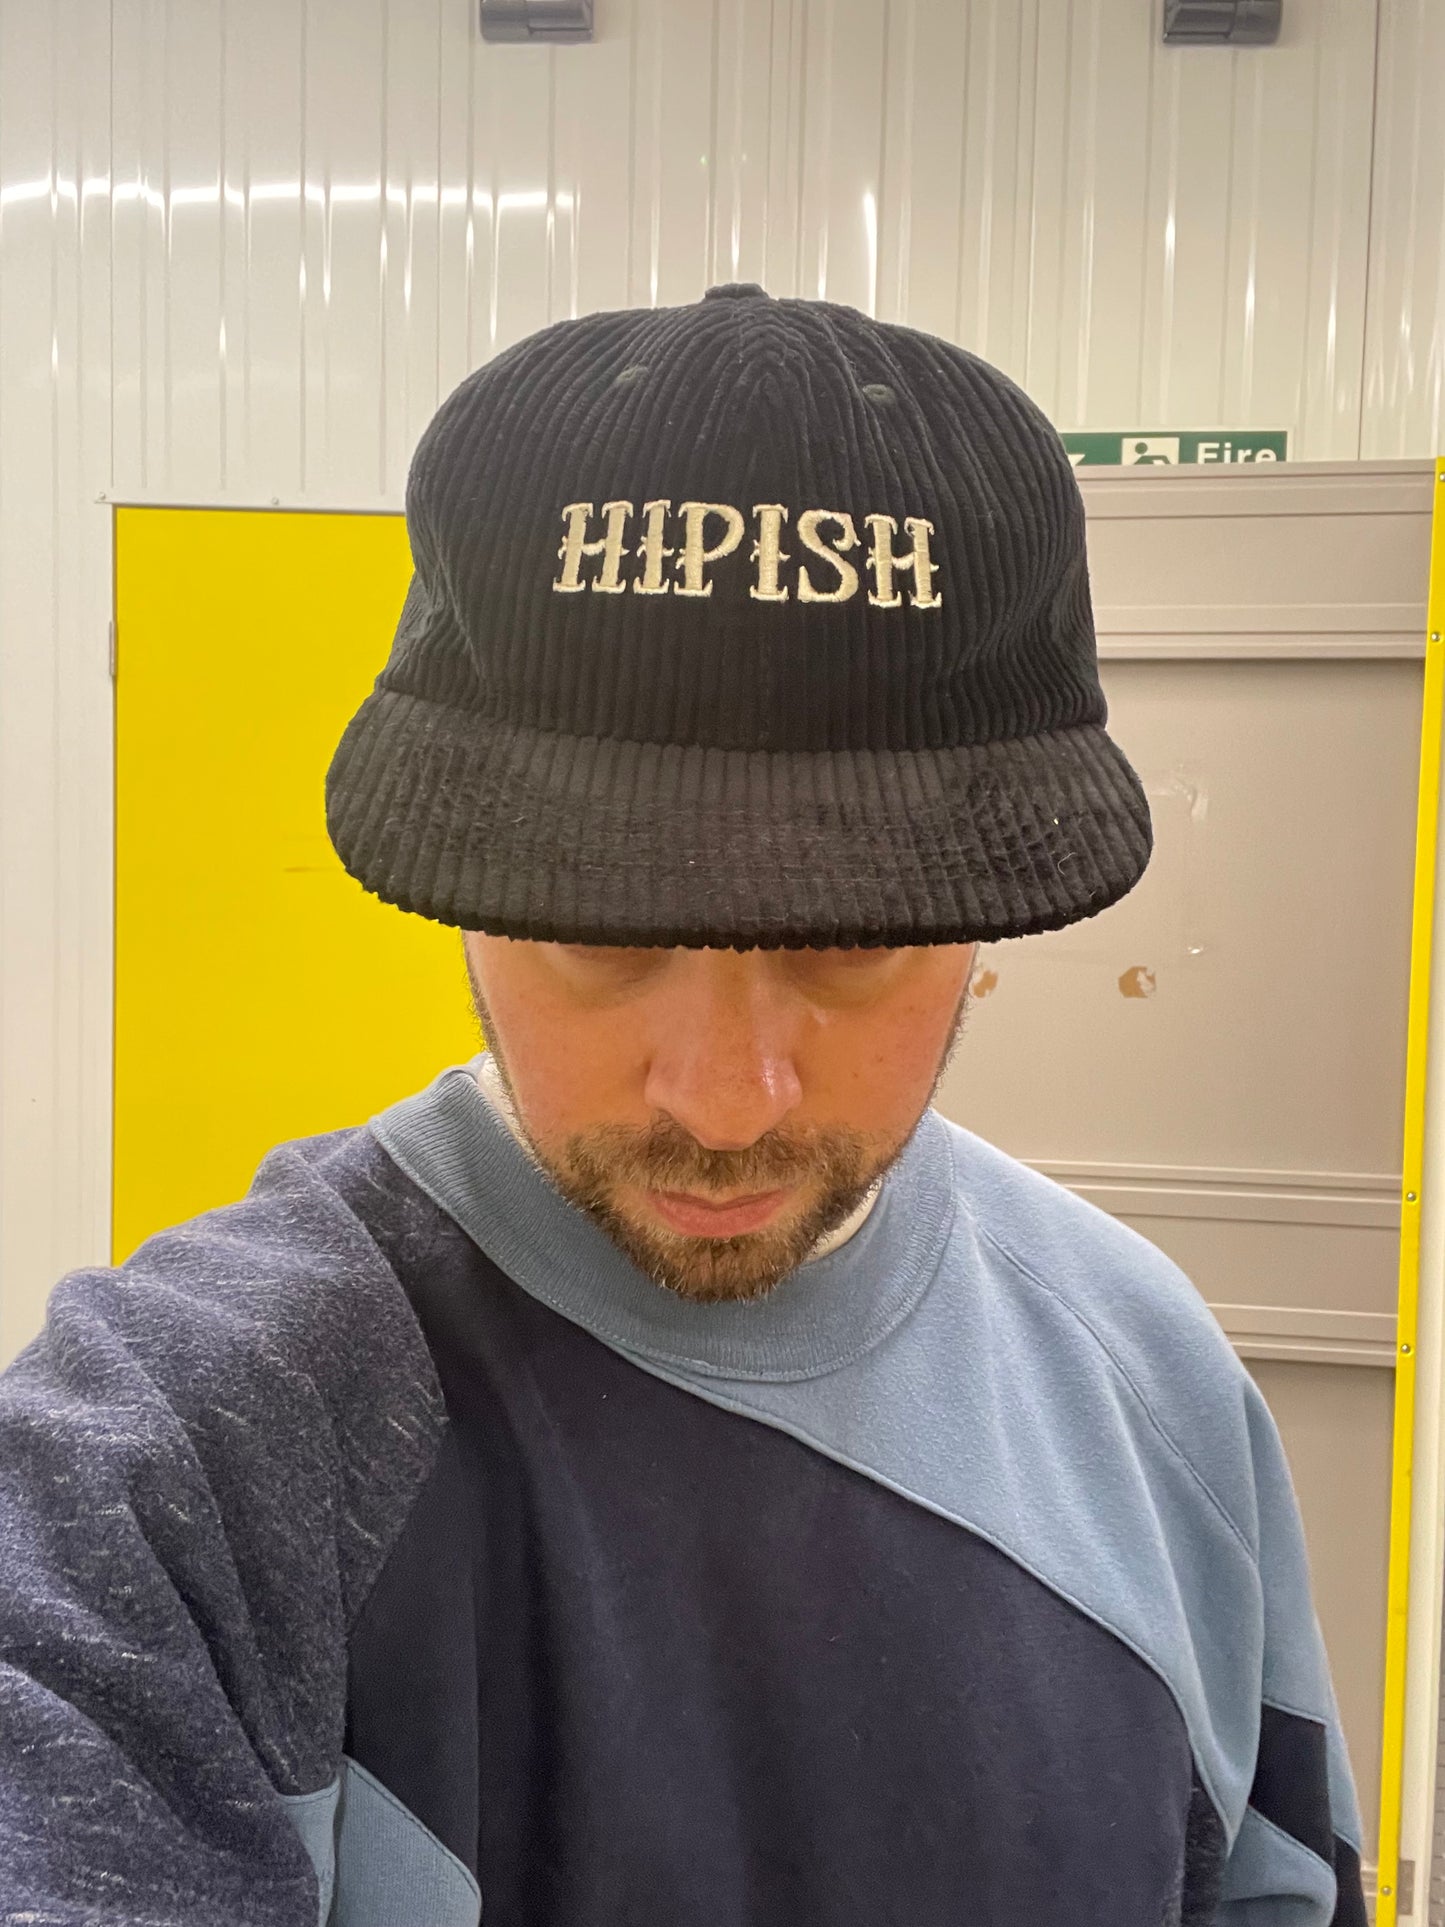 HIPISH Jumbo Cord Black Cap by Hipish Vintage - One Size